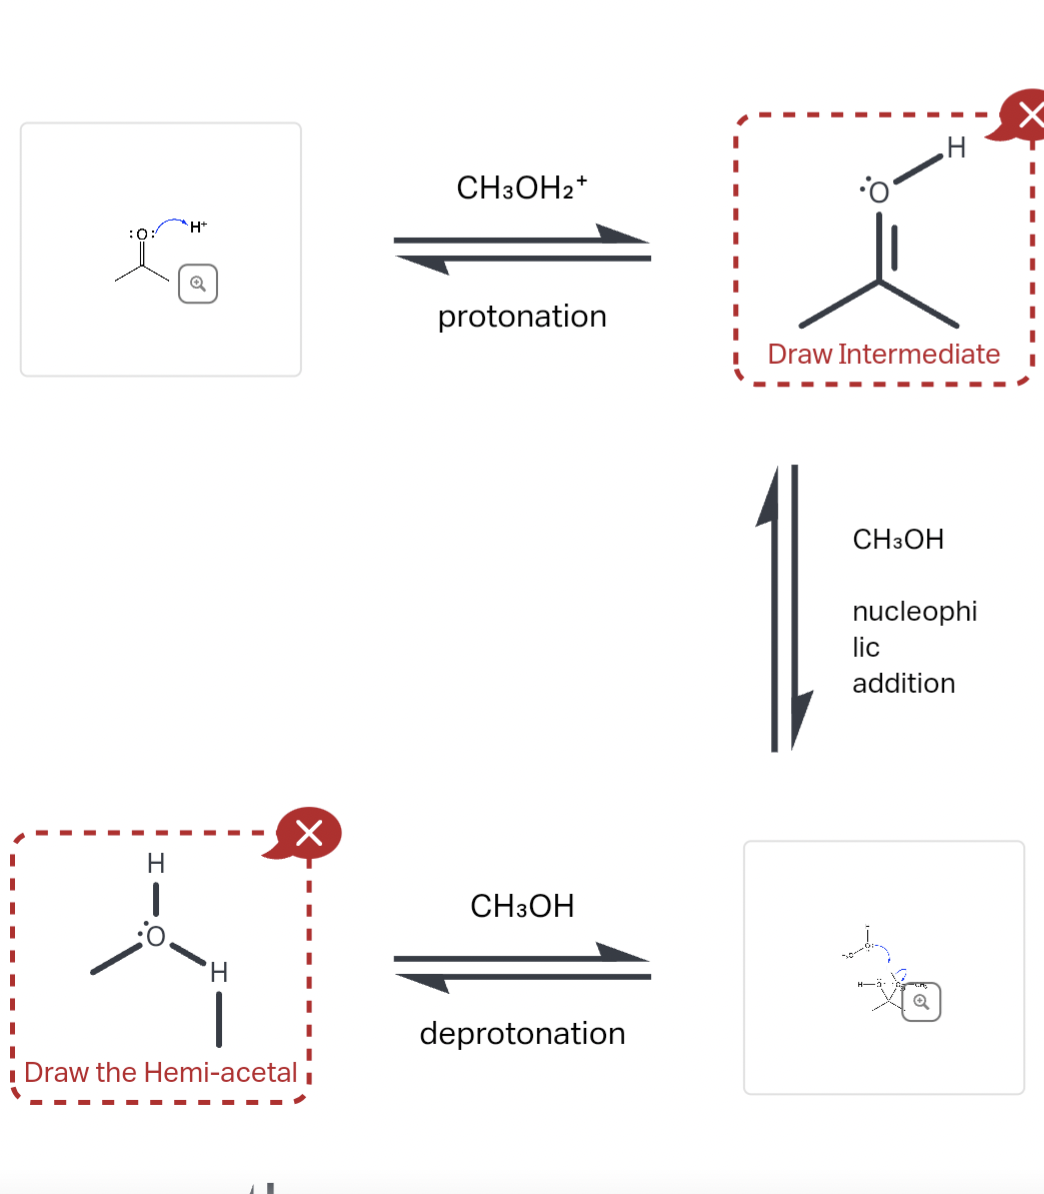 0:
H+
CH3OH2+
H
Q
protonation
Draw Intermediate
'H
Х
■ Draw the Hemi-acetal
I
CH3OH
deprotonation
CH3OH
nucleophi
lic
addition